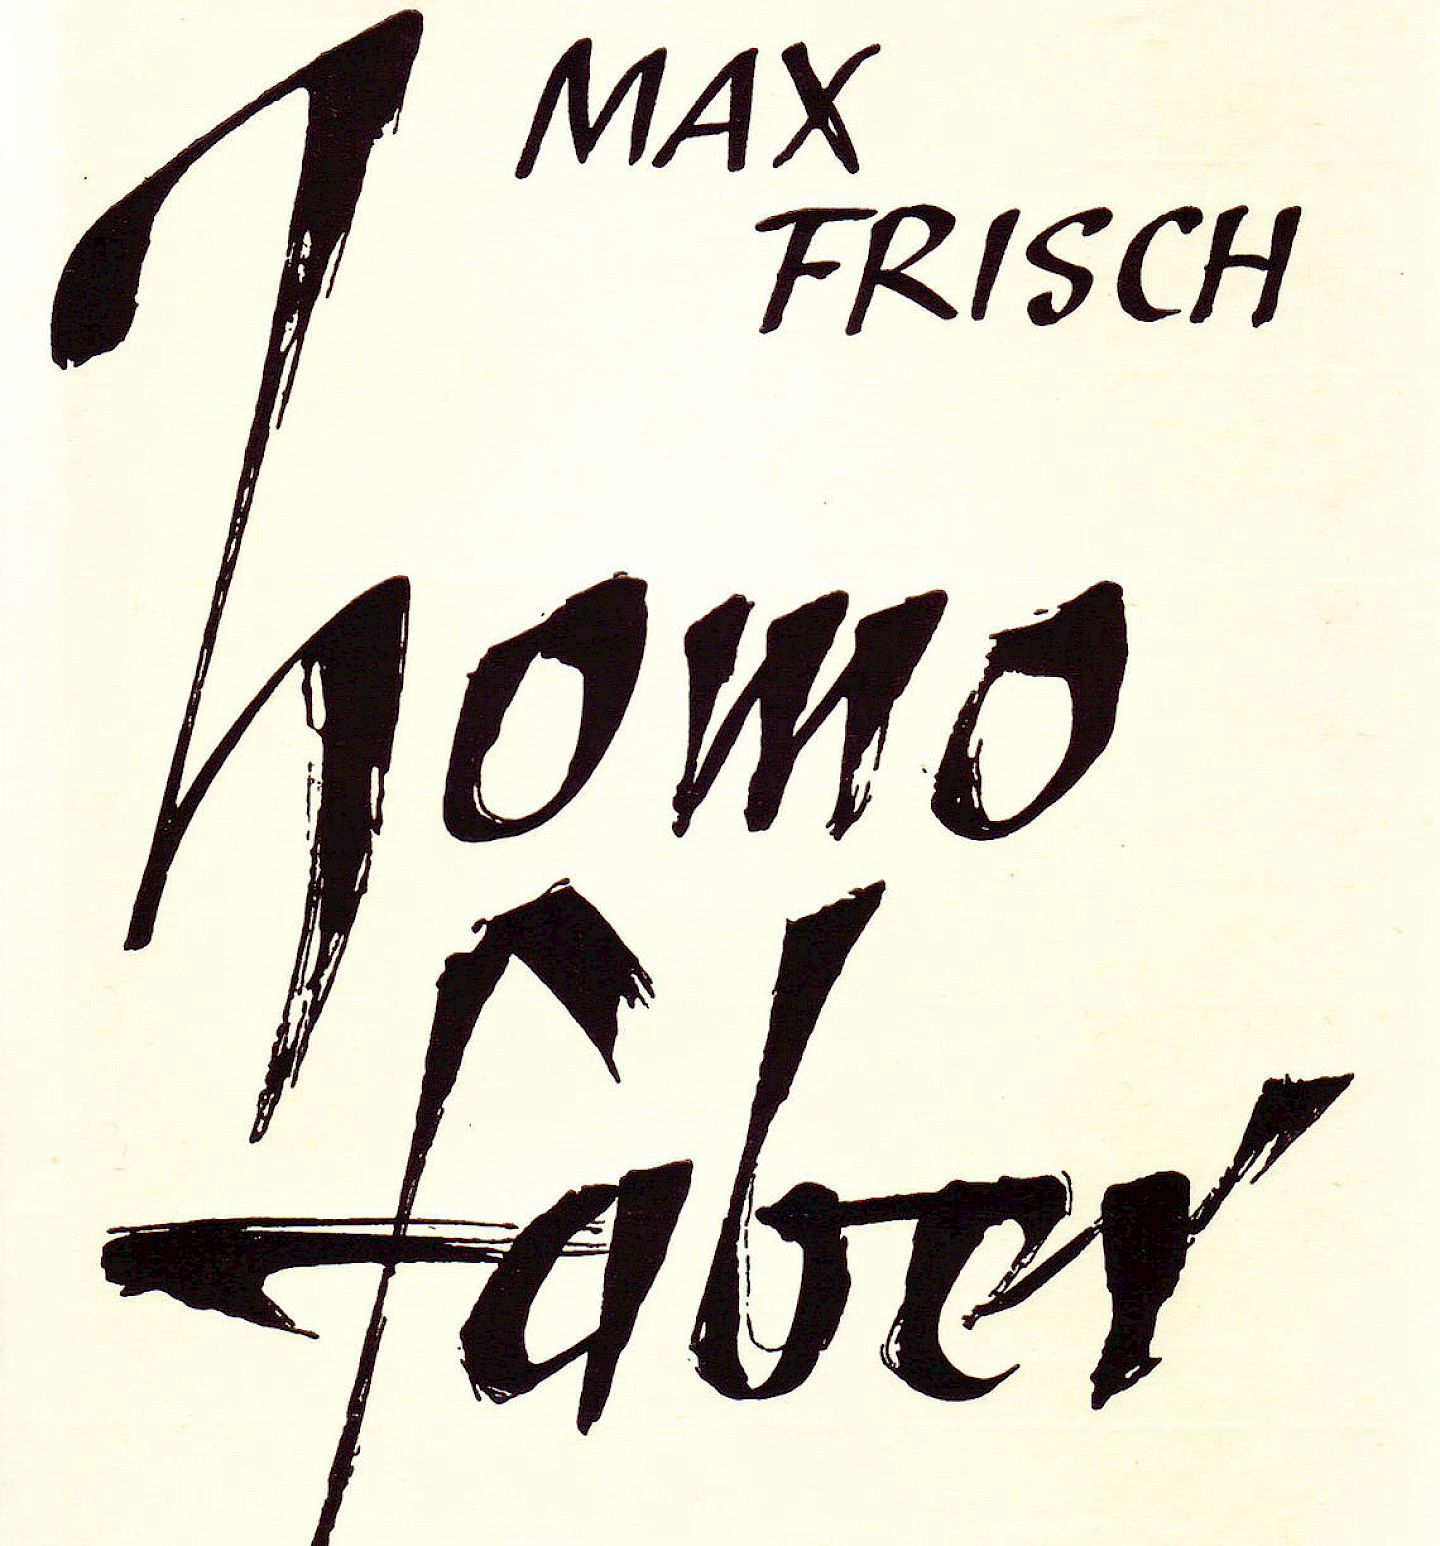 Max Frischs Roman "Homo faber"